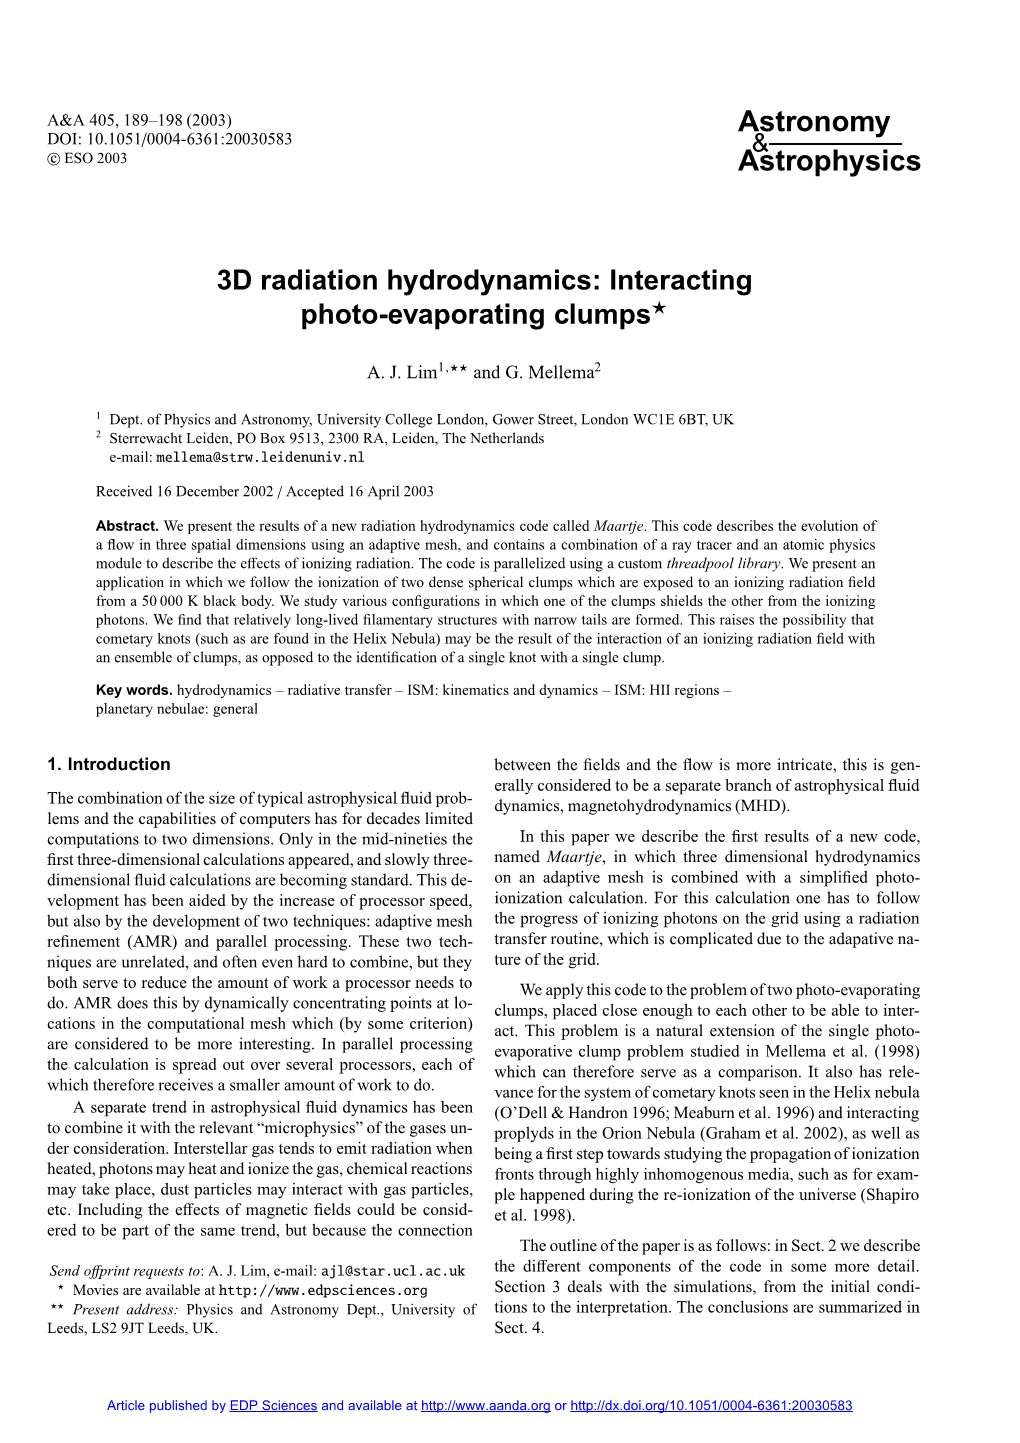 3D Radiation Hydrodynamics: Interacting Photo-Evaporating Clumps